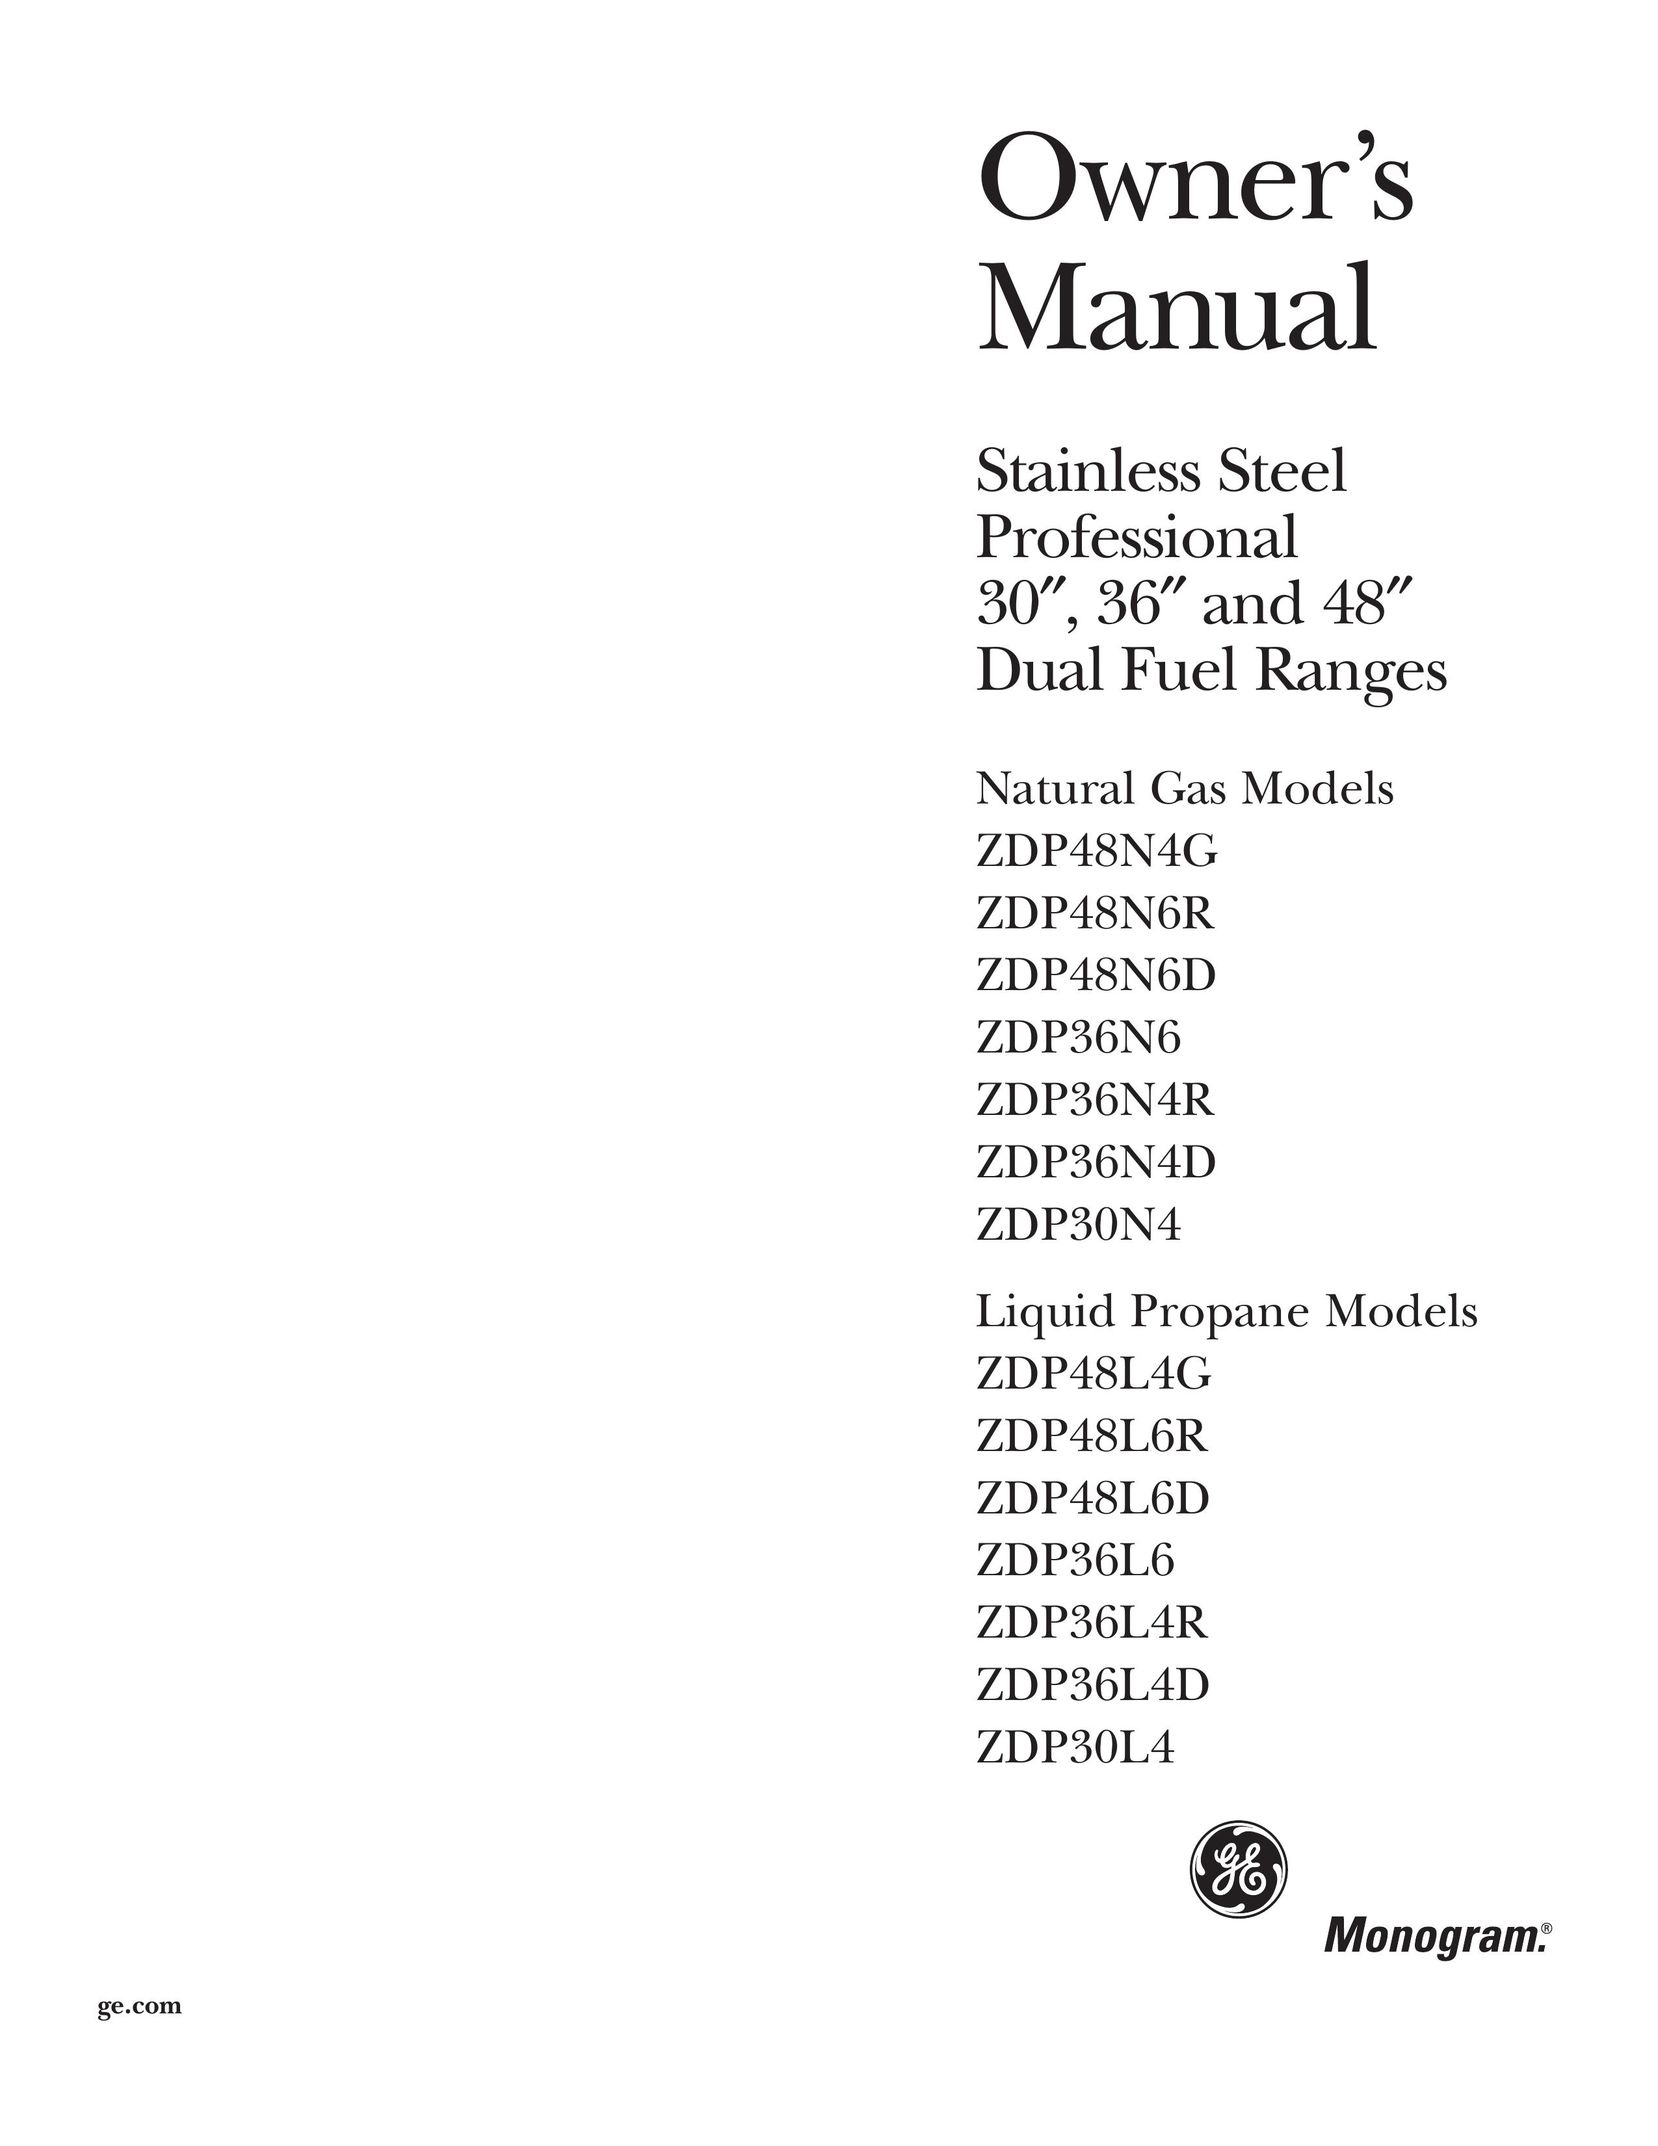 GE Monogram ZDP36L4R Range User Manual